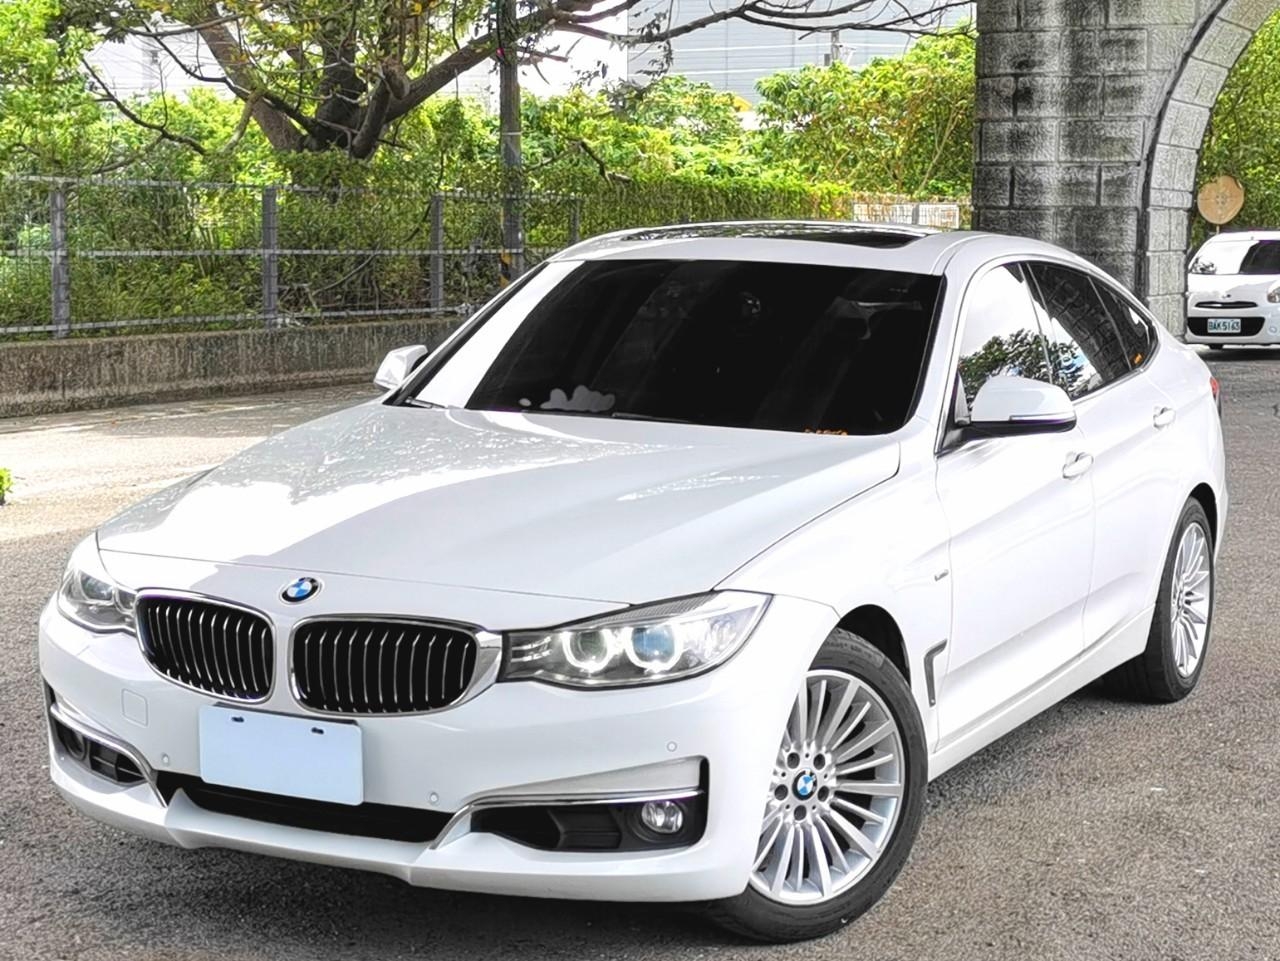 BMW 二手車買賣-2015 BMW 3-Series GT 320i Sport-22.8萬公里-SUM認證車庫